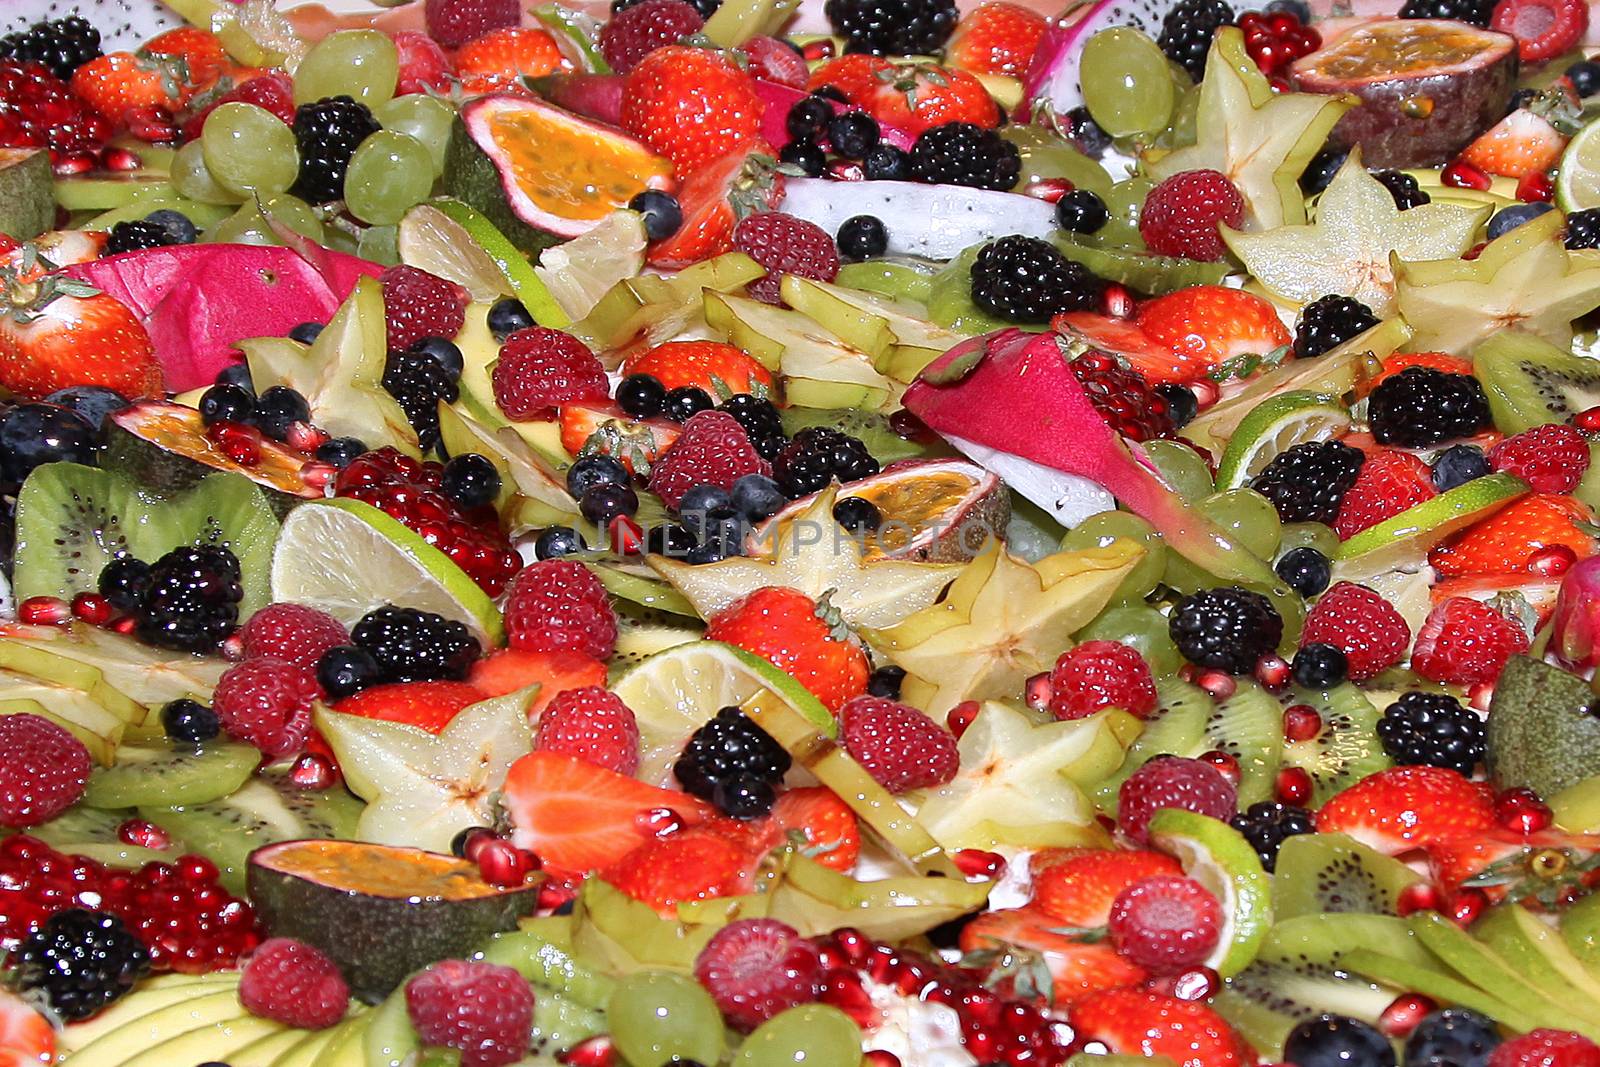 Cake with various berries and fruits by olga_zinovskaya